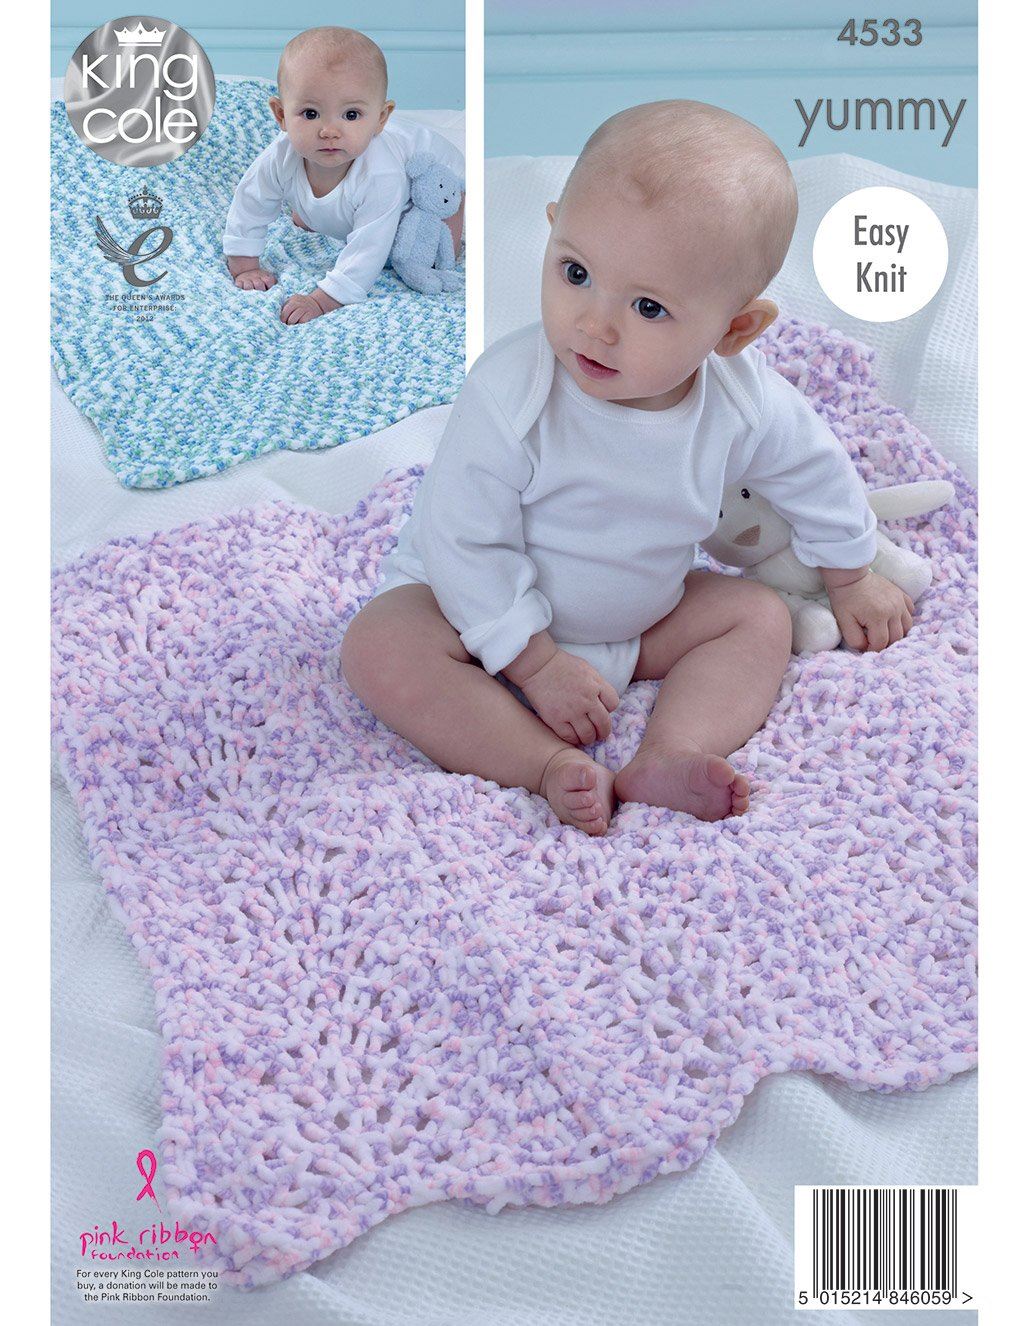 King Cole Yummy knitting pattern (4533) blankets